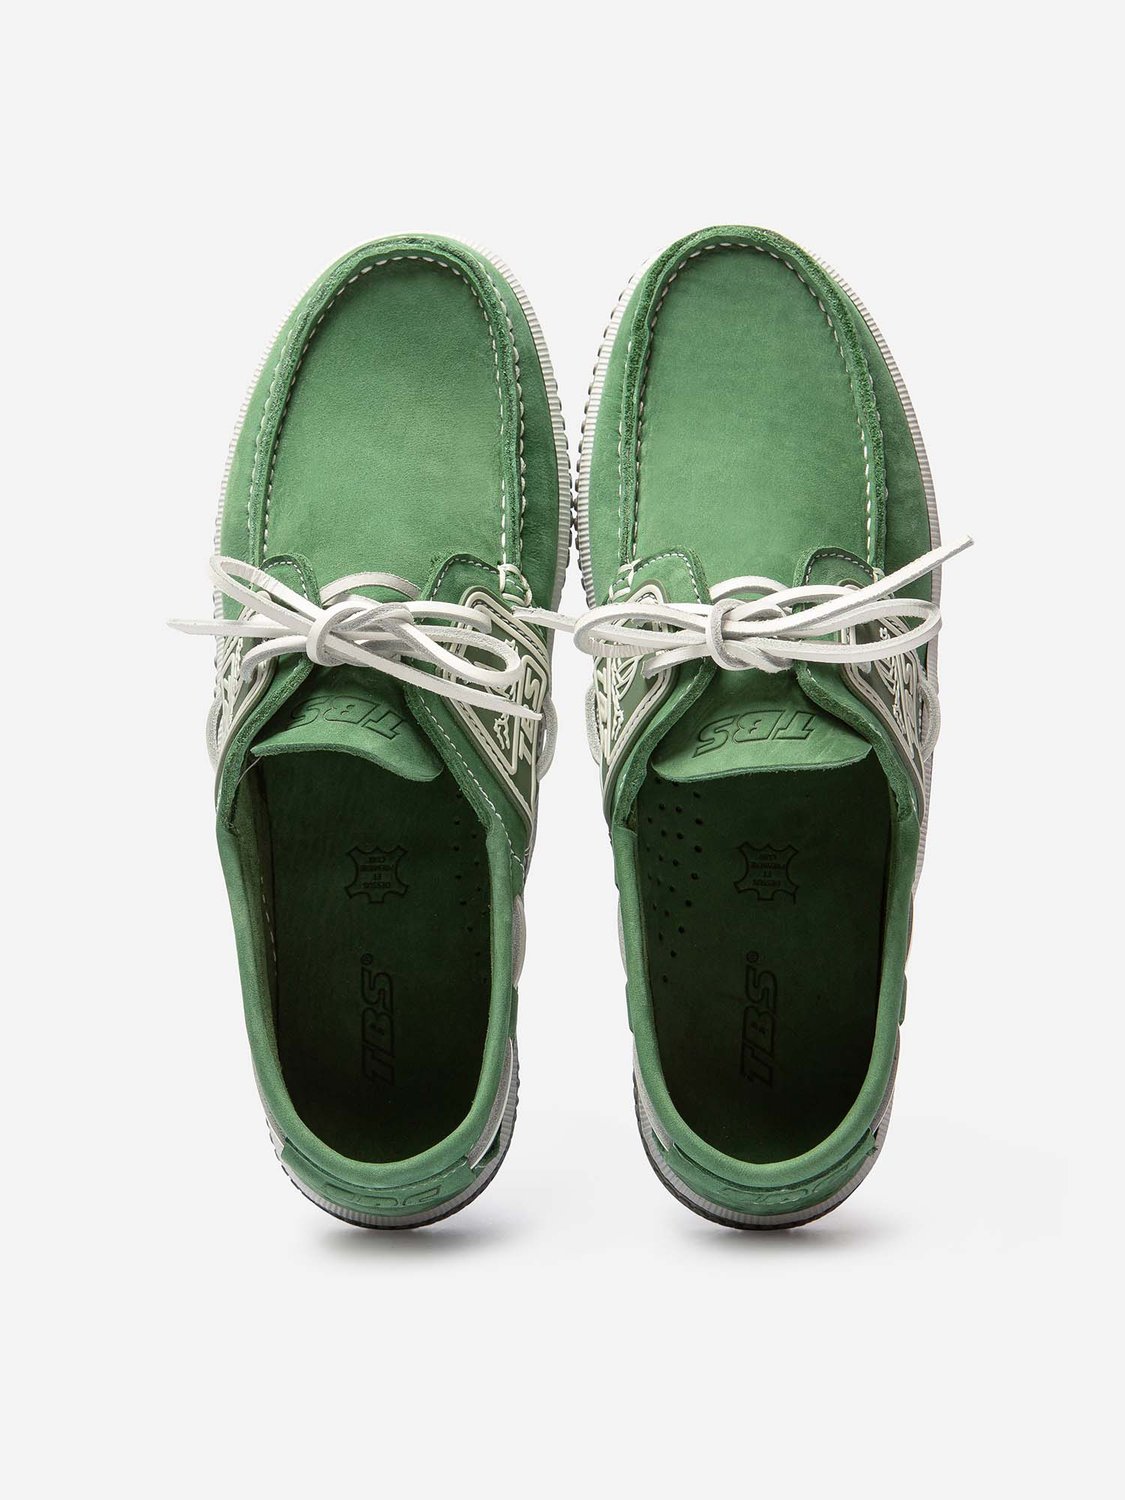 Chaussures Bateau Homme Cuir Nubuck Vert